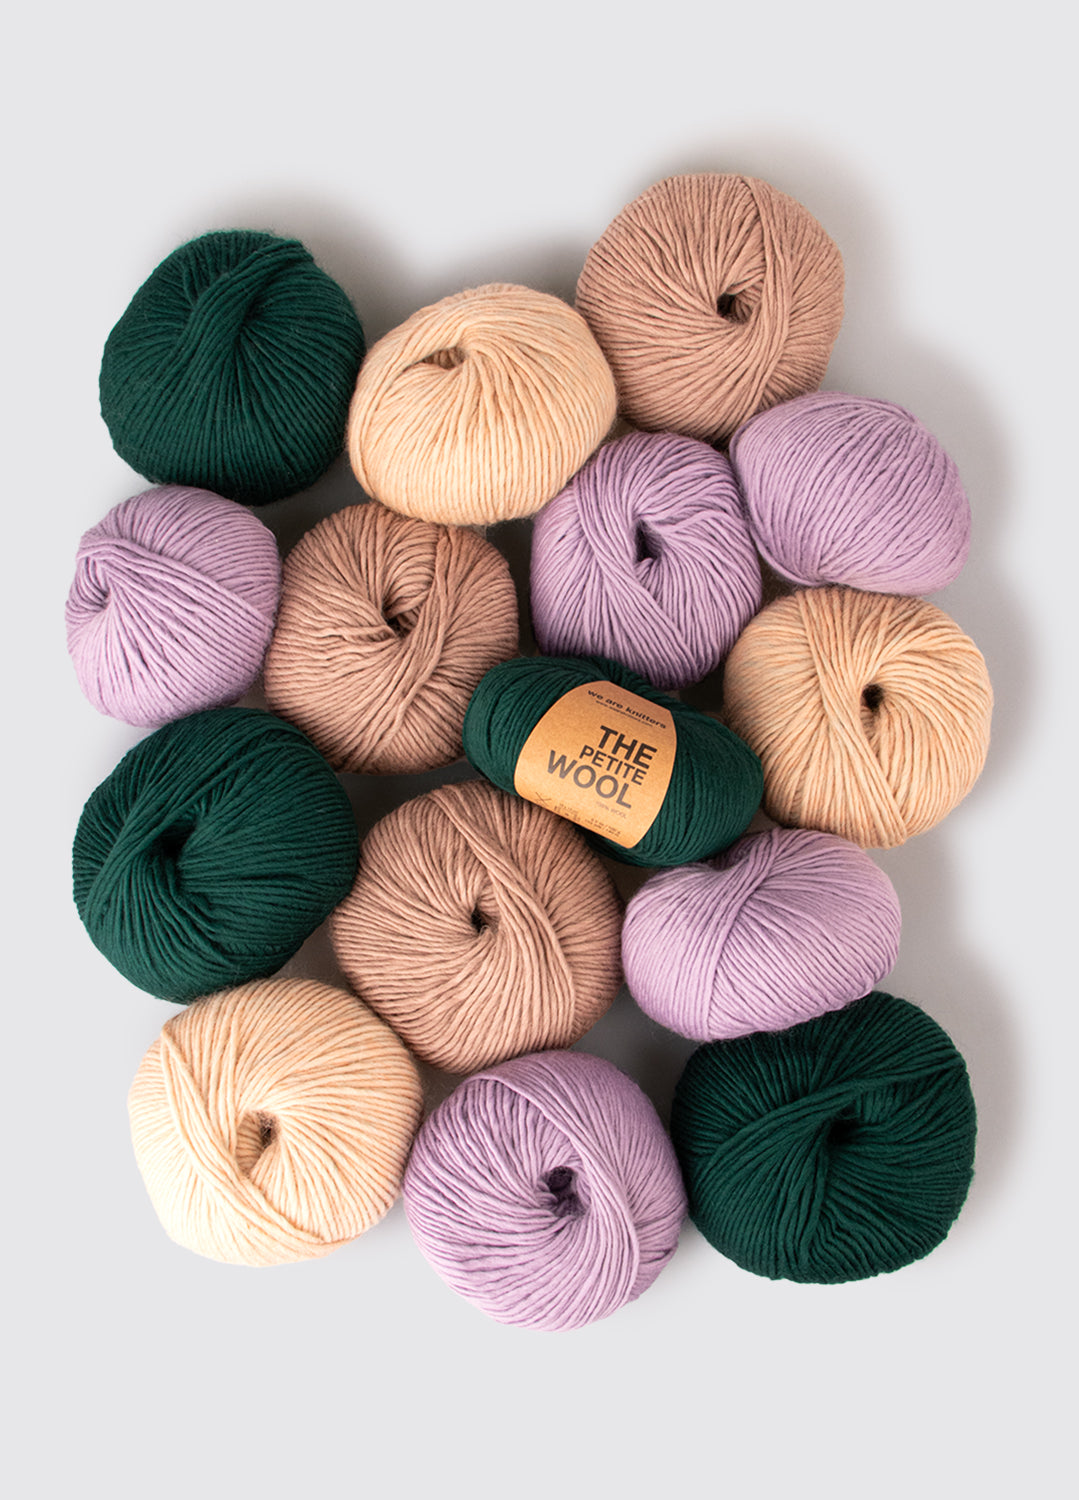 15 Pack of Petite Wool Yarn Balls